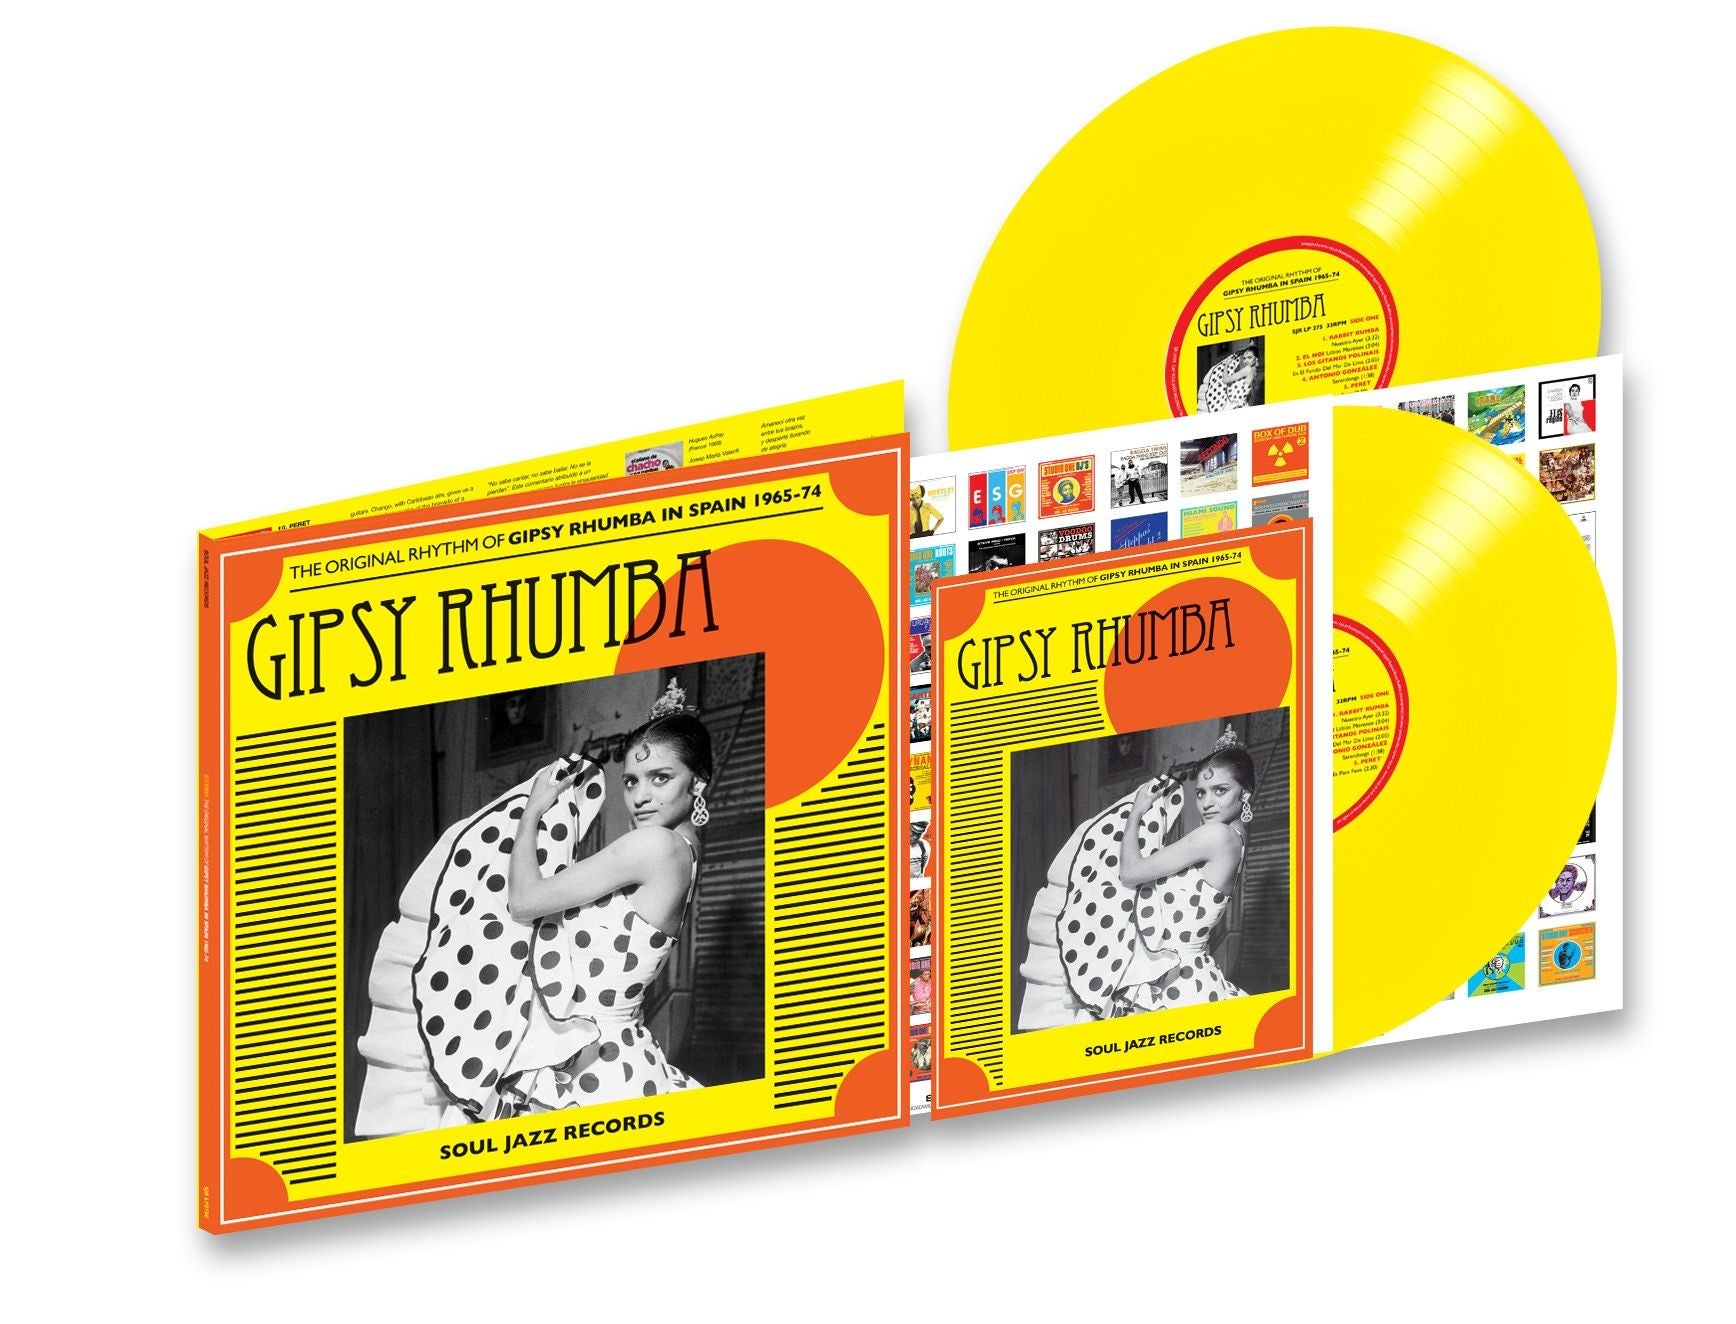 VARIOUS - Soul Jazz Records Presents: Gipsy Rhumba: The Original Rhythm of Gipsy Rhumba in Spain 1965 - 1974 - 2LP - Yellow Vinyl [RSD23]